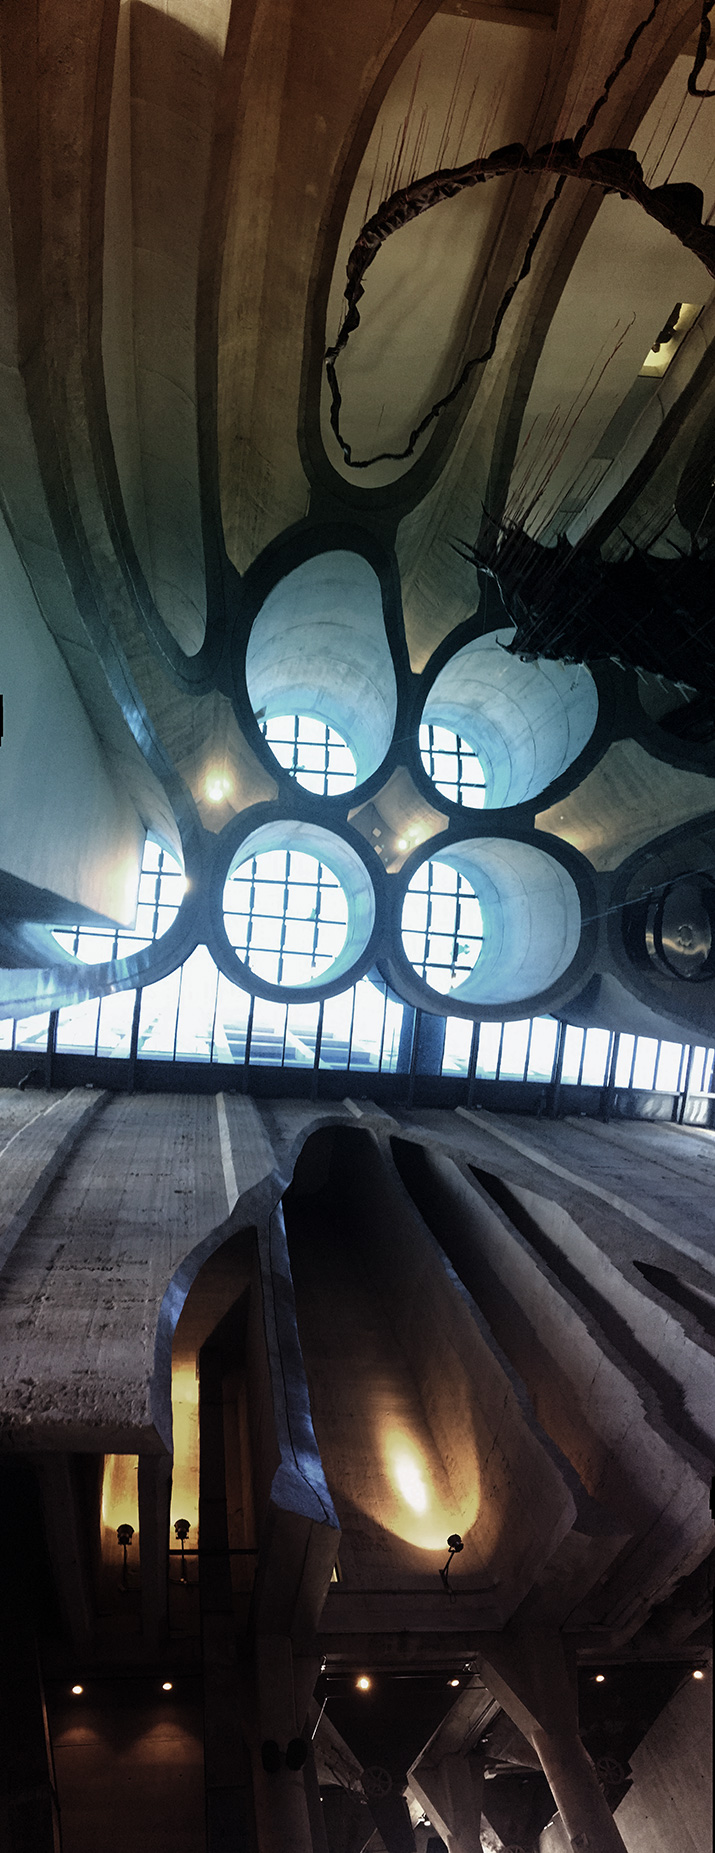 Zeitz Mocaa - The atrium which features the grain silo tubes